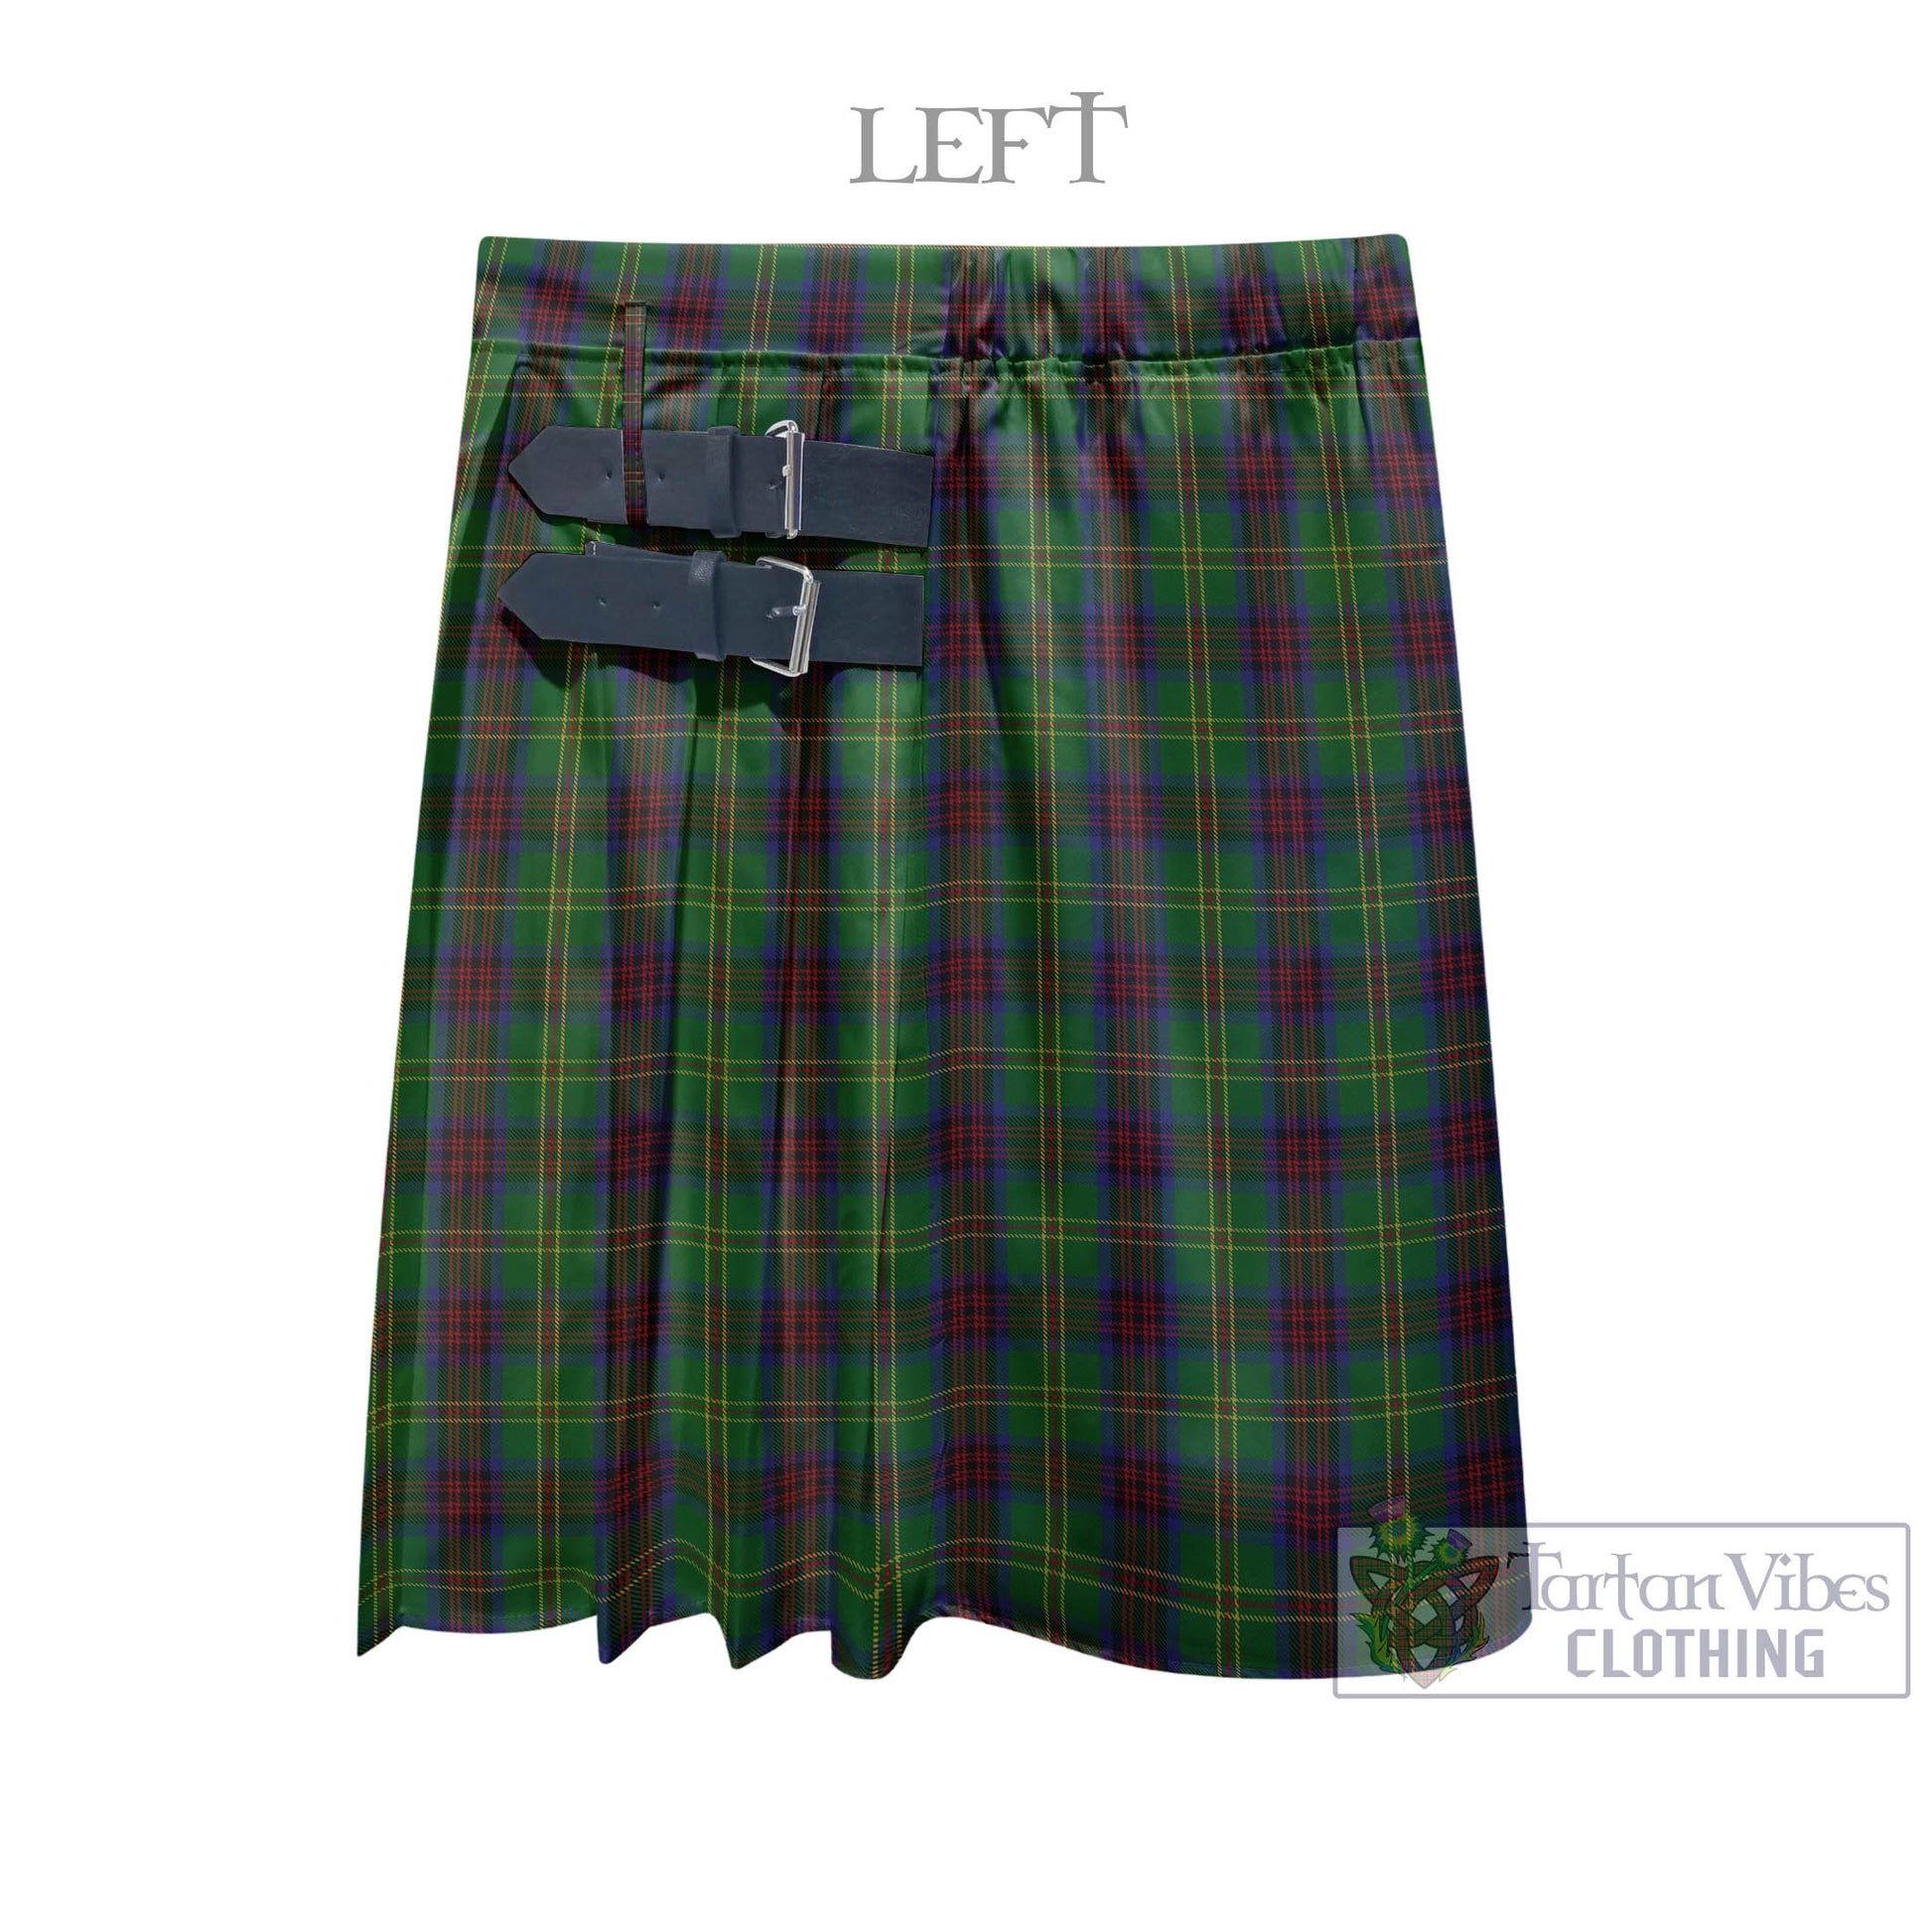 Tartan Vibes Clothing Connolly Hunting Tartan Men's Pleated Skirt - Fashion Casual Retro Scottish Style